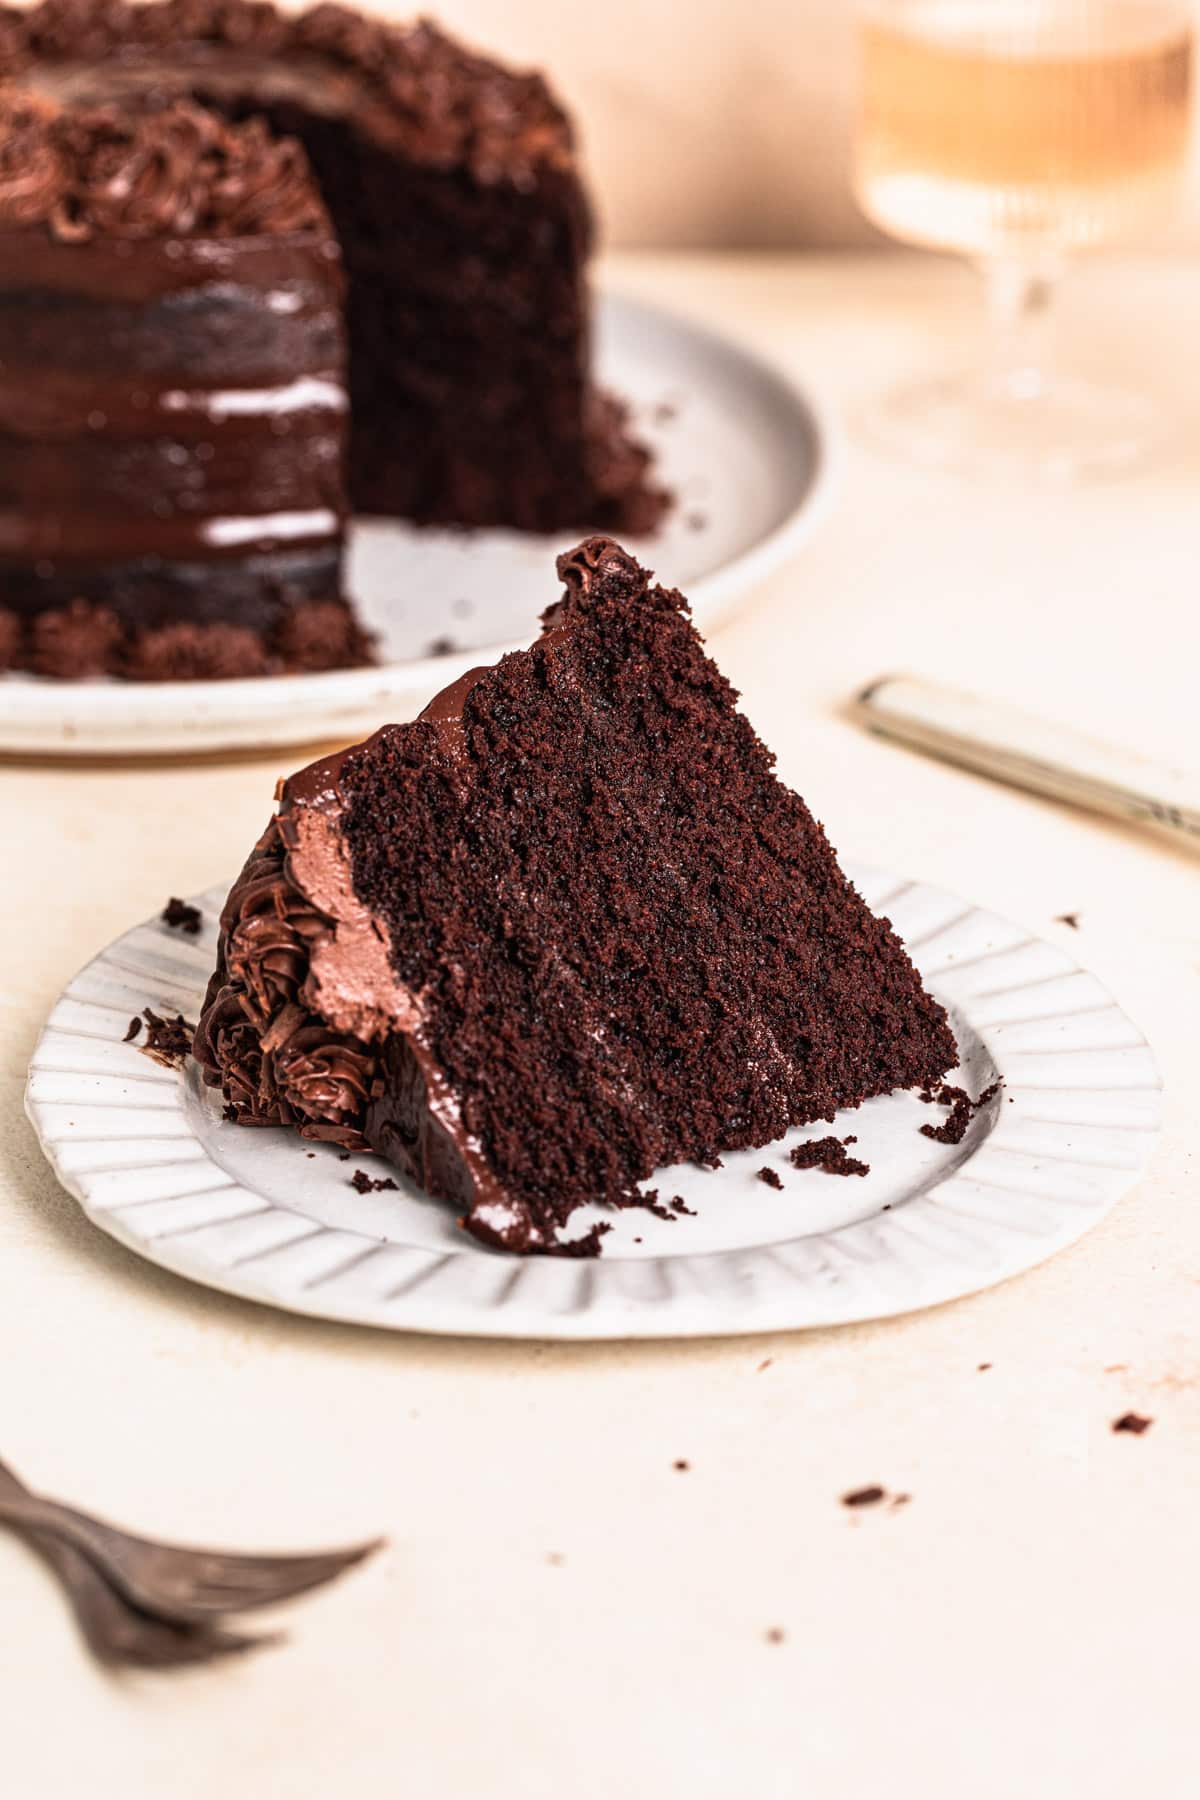 a slice of lactose free chocolate cake